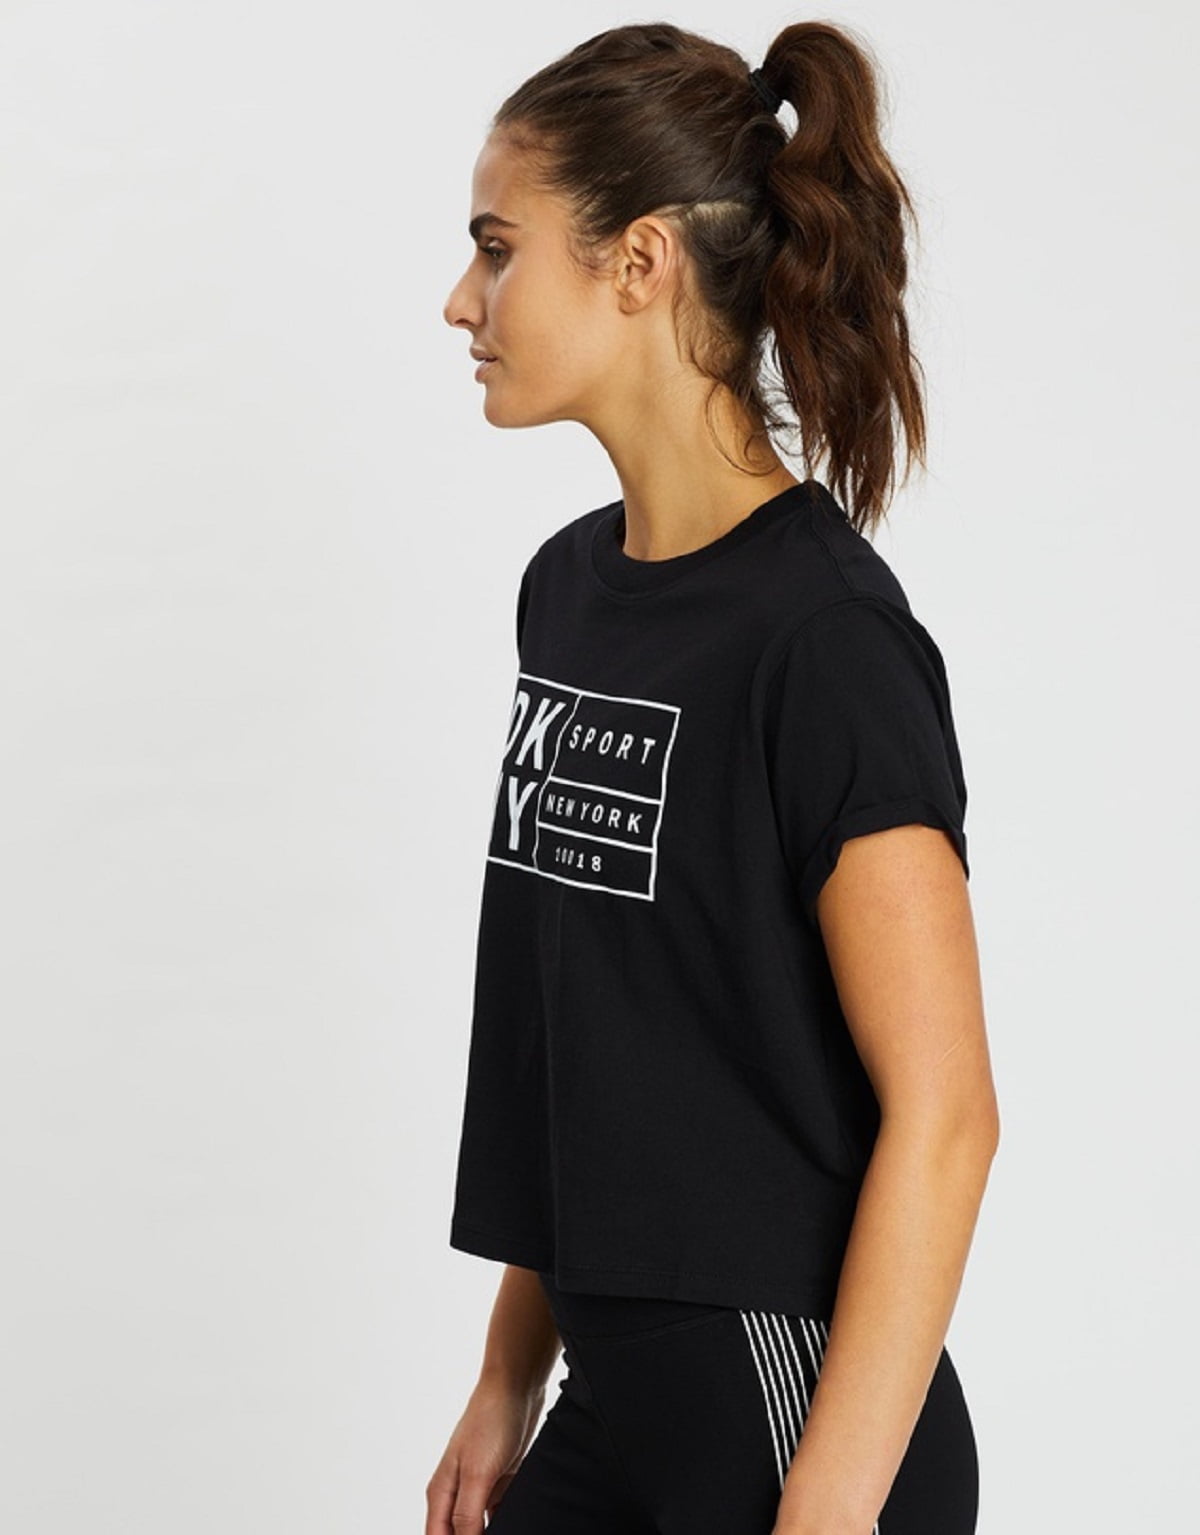 DKNY Sport Womens Fitness Activewear T-Shirt Black M